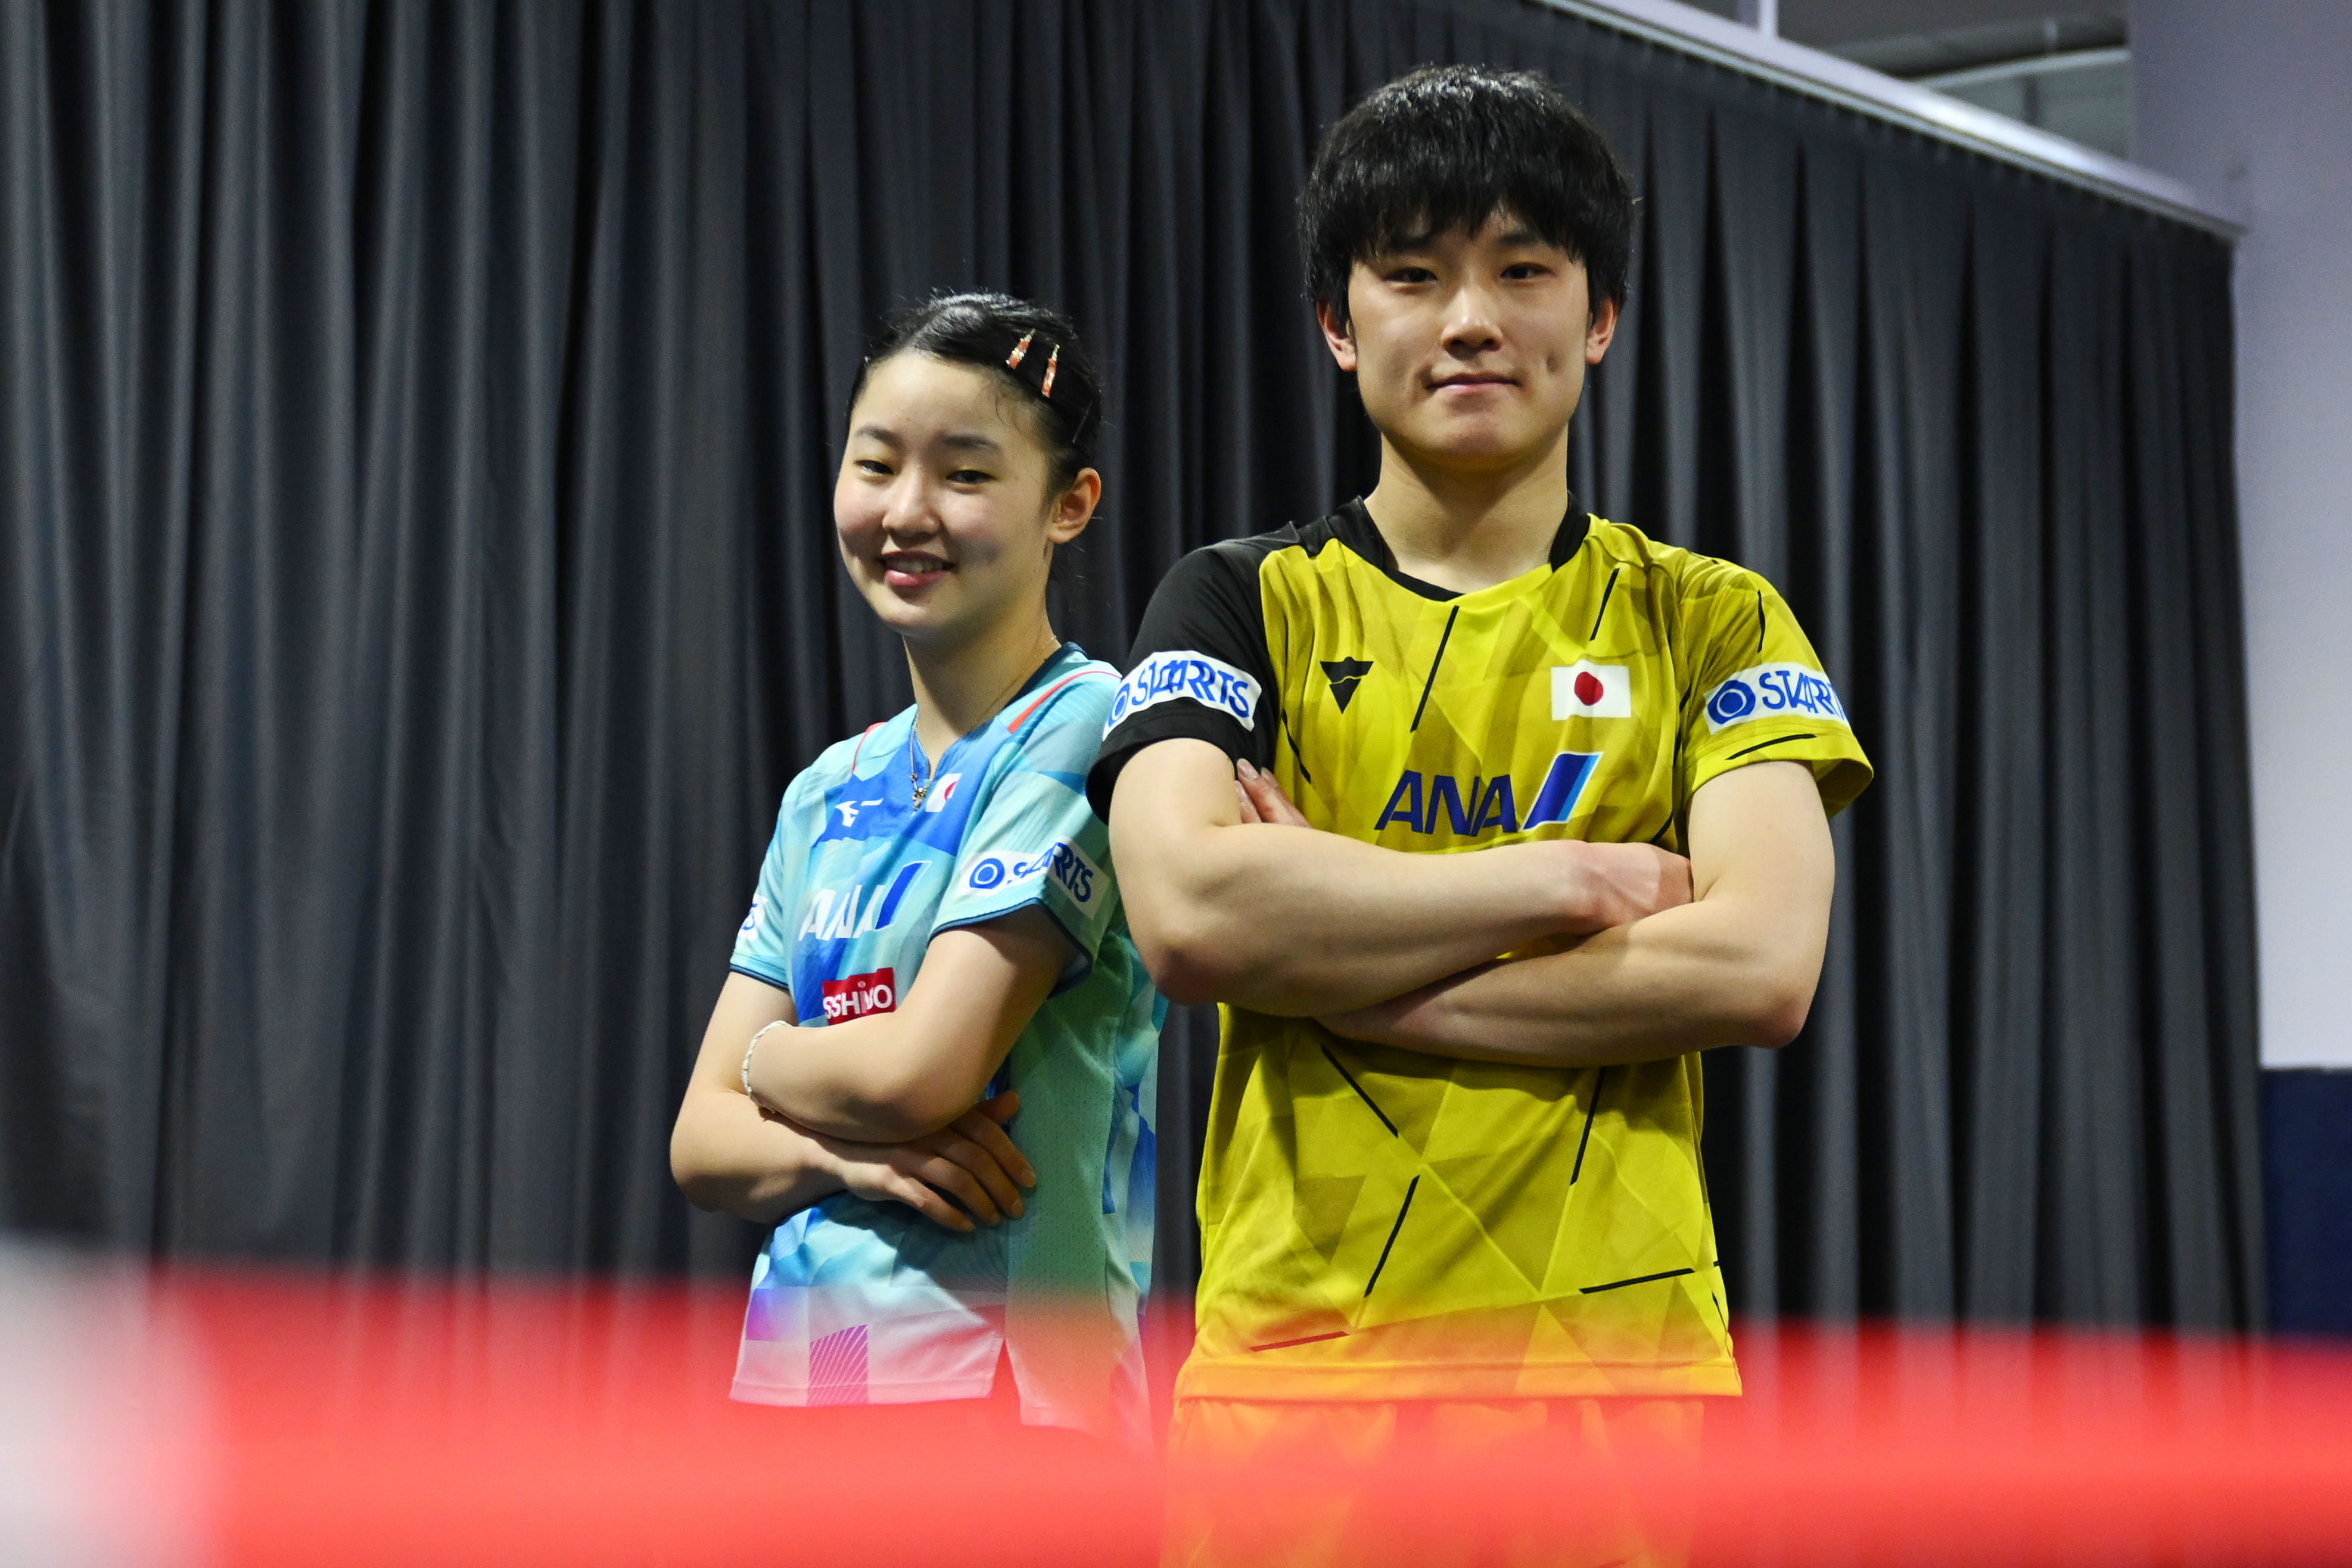 Siblings and table tennis prodigies Tomokazu and Miwa eye Olympic success